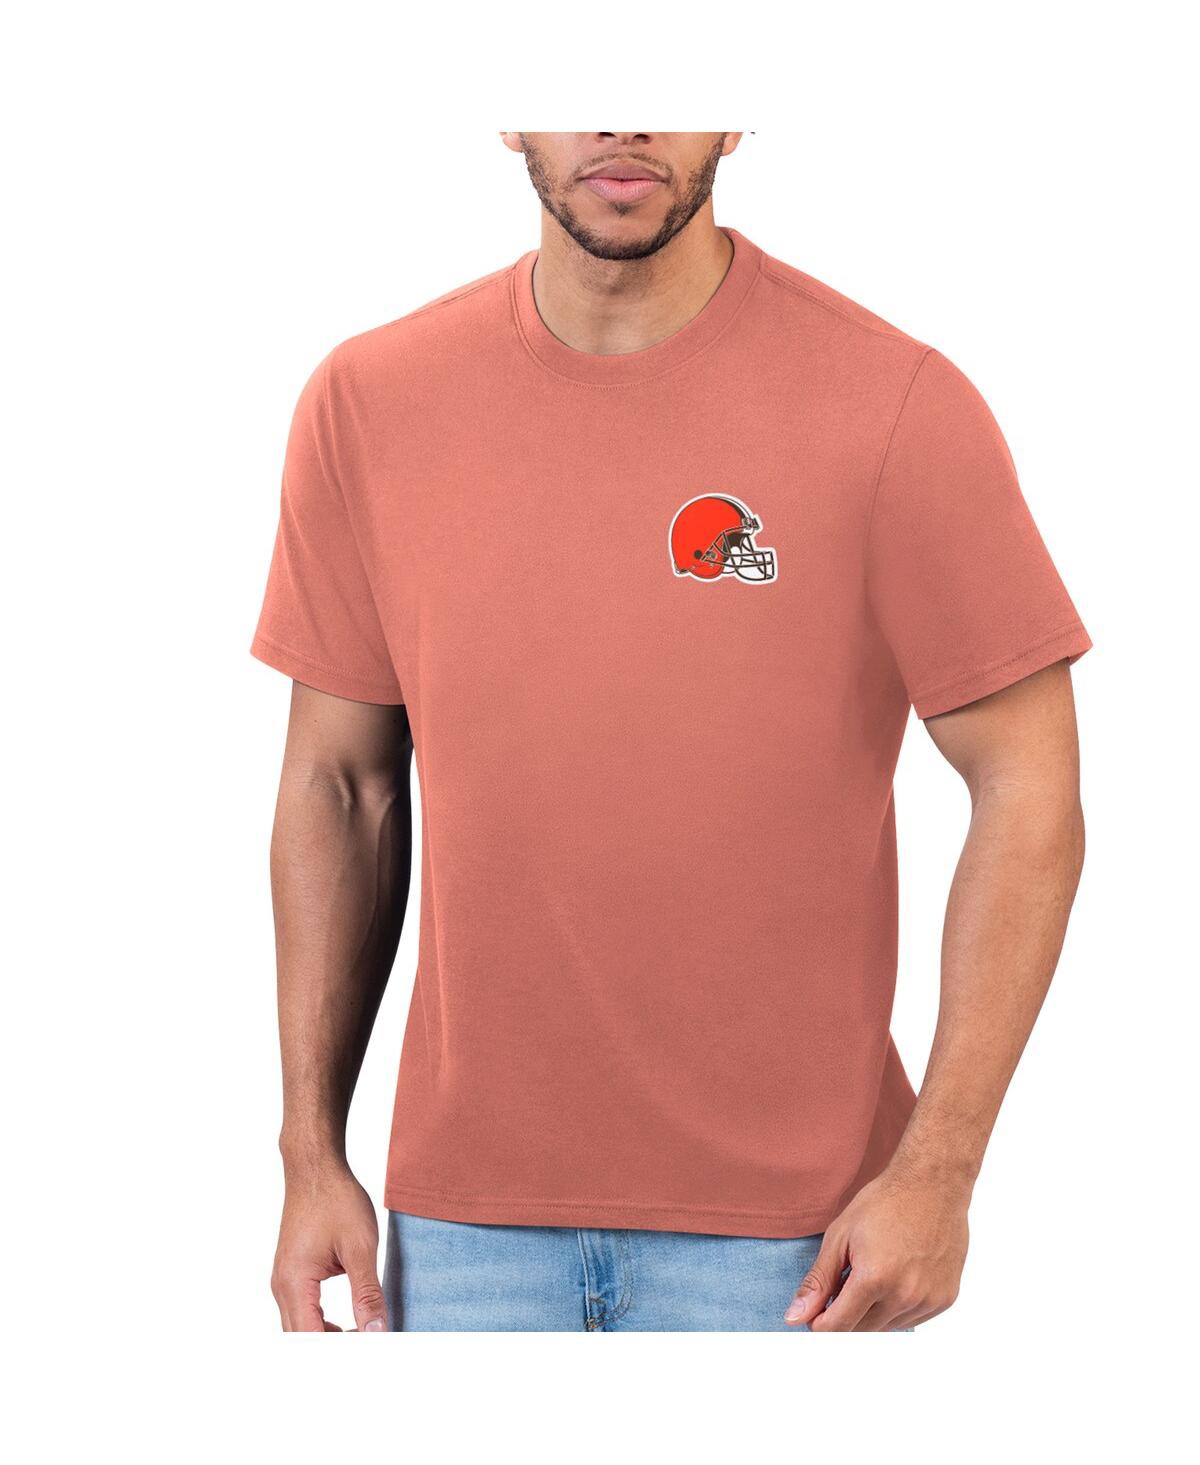 Men's Margaritaville Orange Cleveland Browns T-shirt - Orange